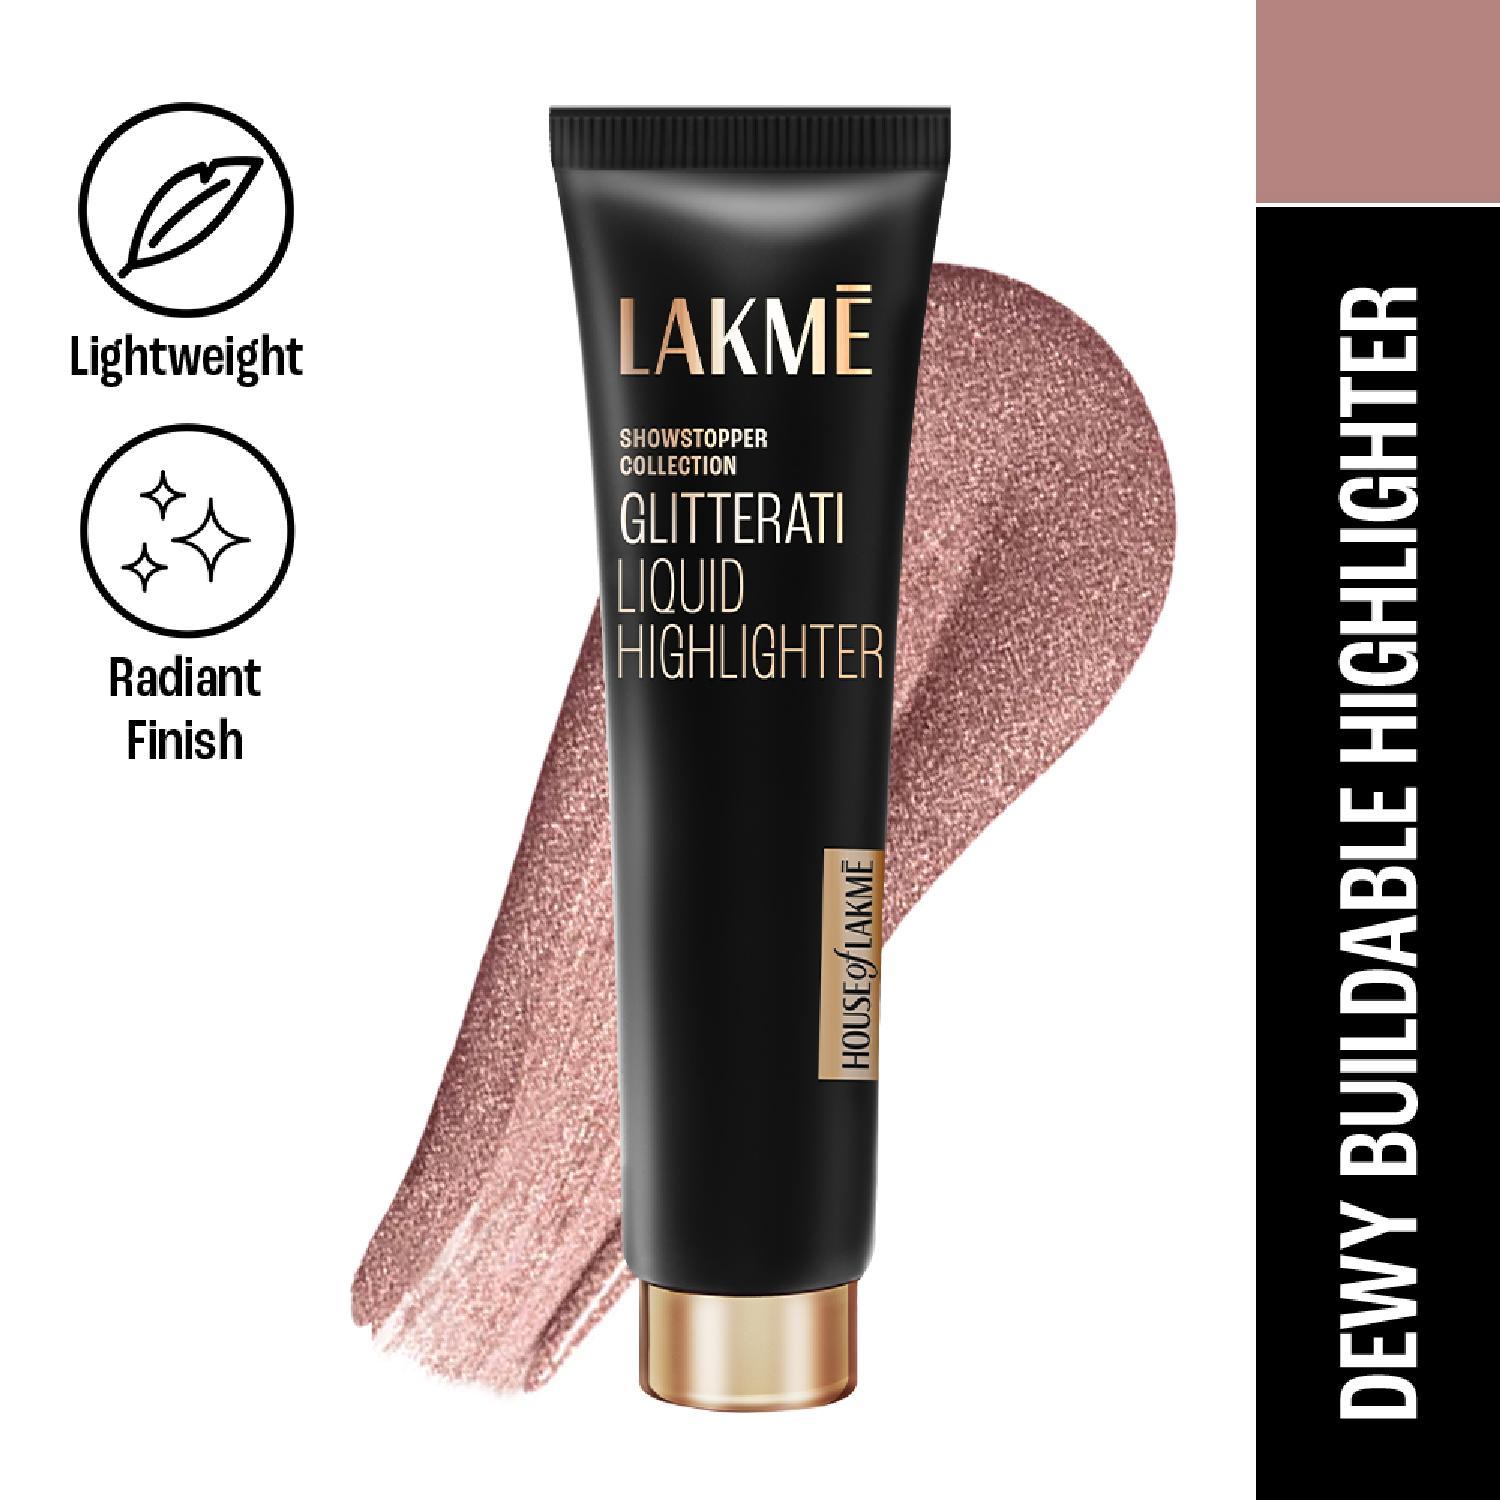 Lakme | Lakme Glitterati Liquid Highlighter For Dewy Makeup Look - Rose Gold (25 g)